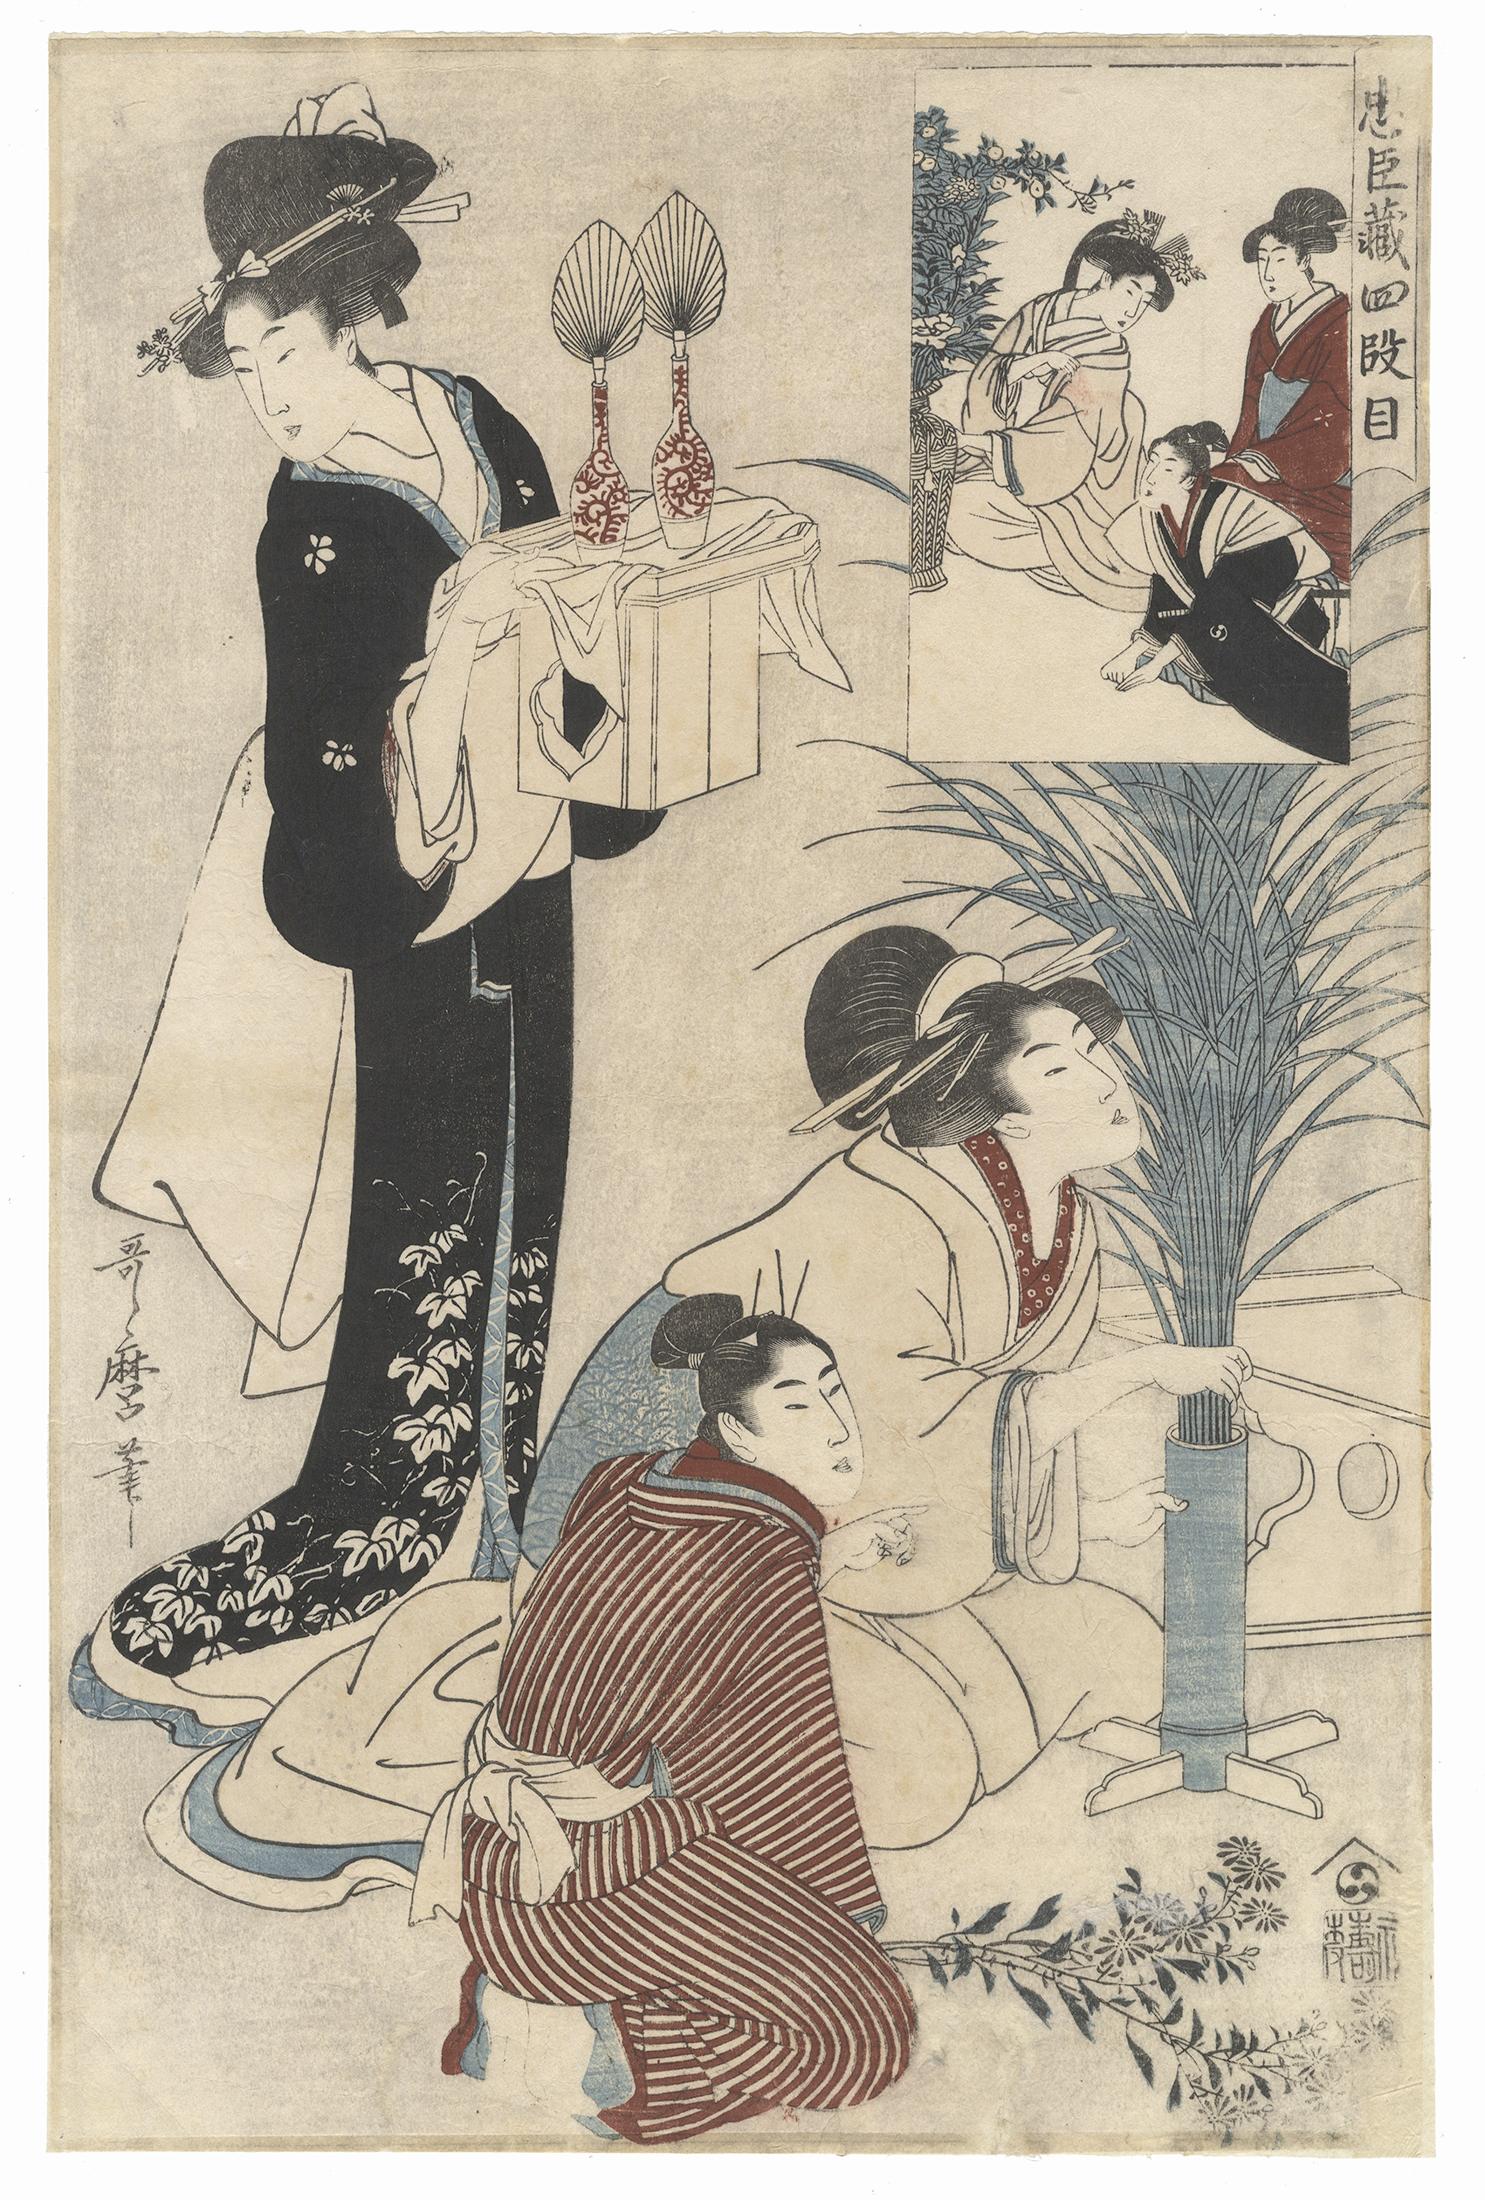 Kitagawa Utamaro Portrait Print - Utamaro, Beauty, The Faithful Samurai, Japanese Woodblock Print, Ukiyo-e, Edo